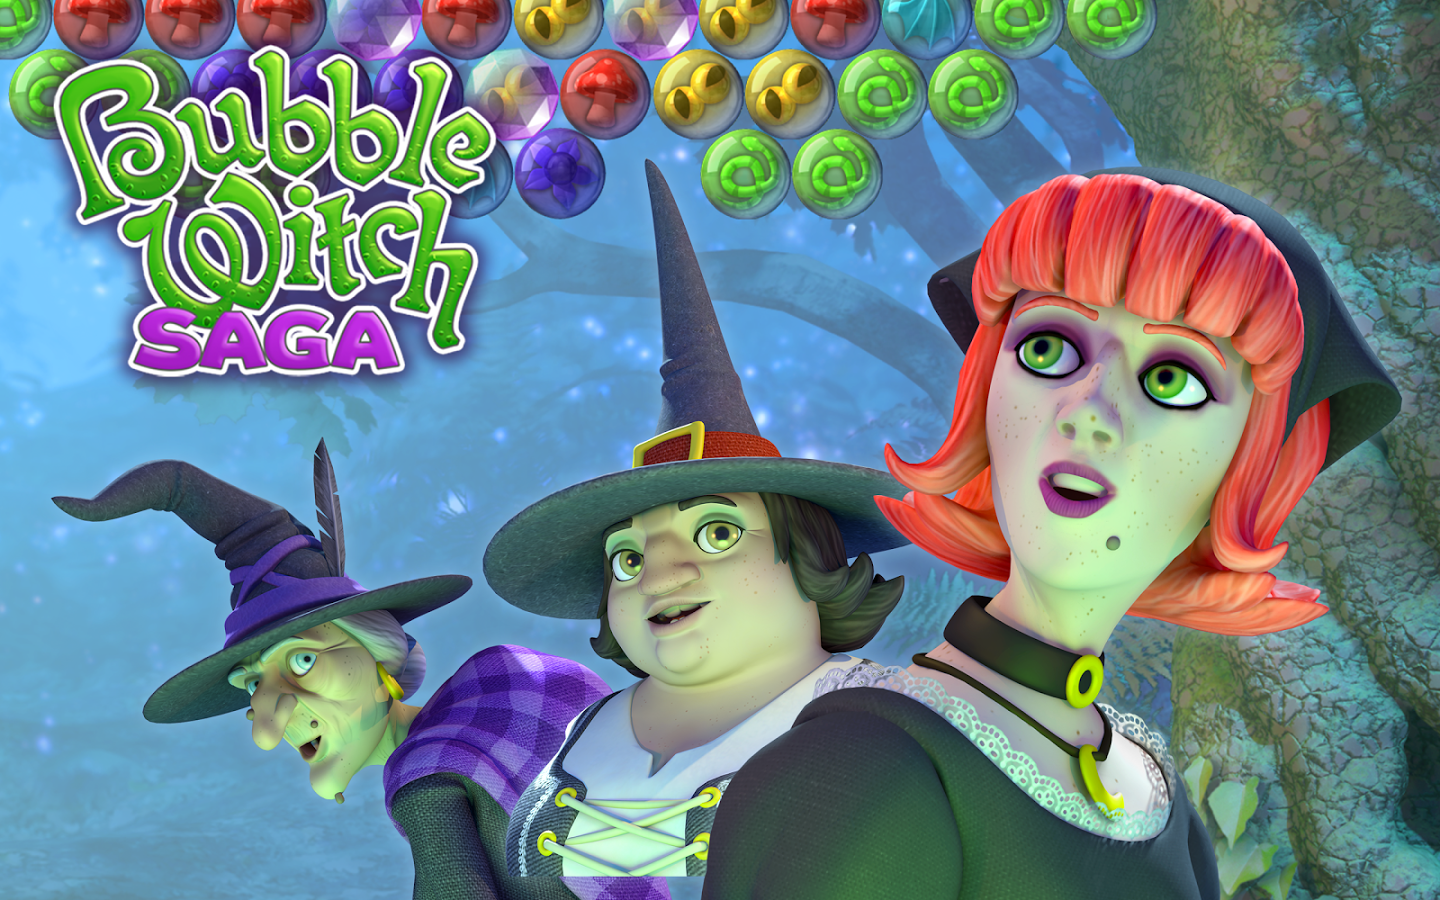 download bubble witch saga 3 generator